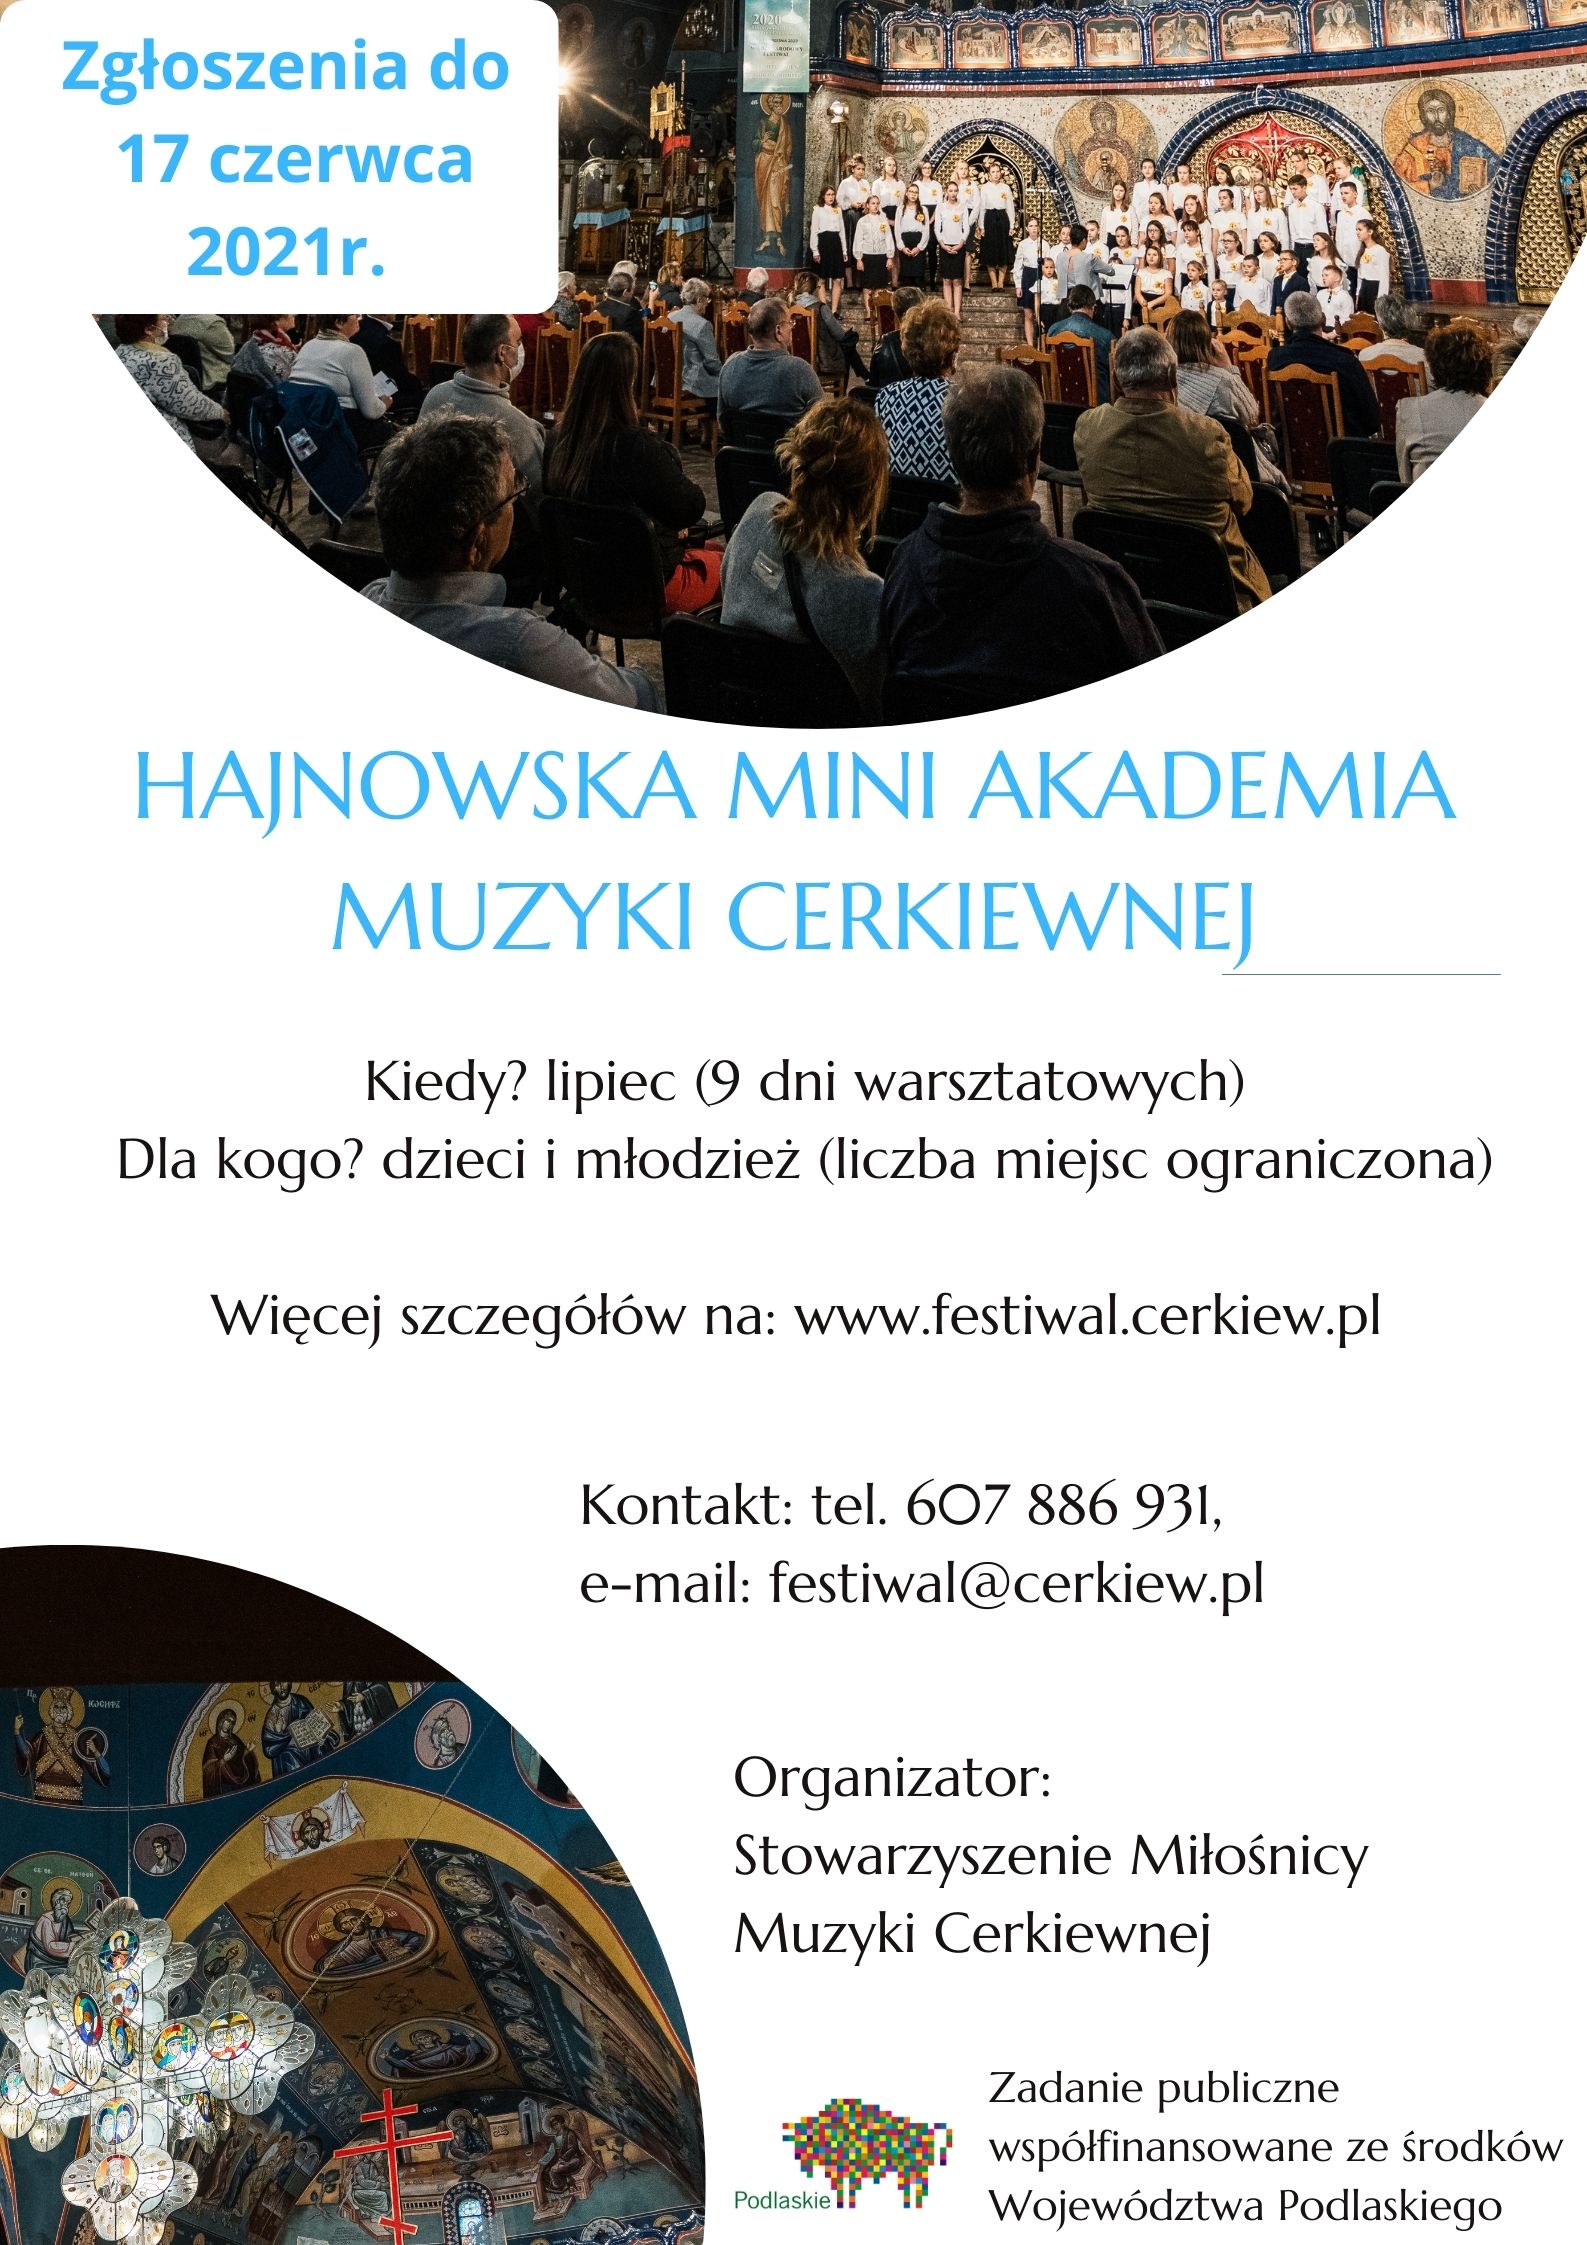 Hajnowska Mini Akademia Muzyki Cerkiewnej